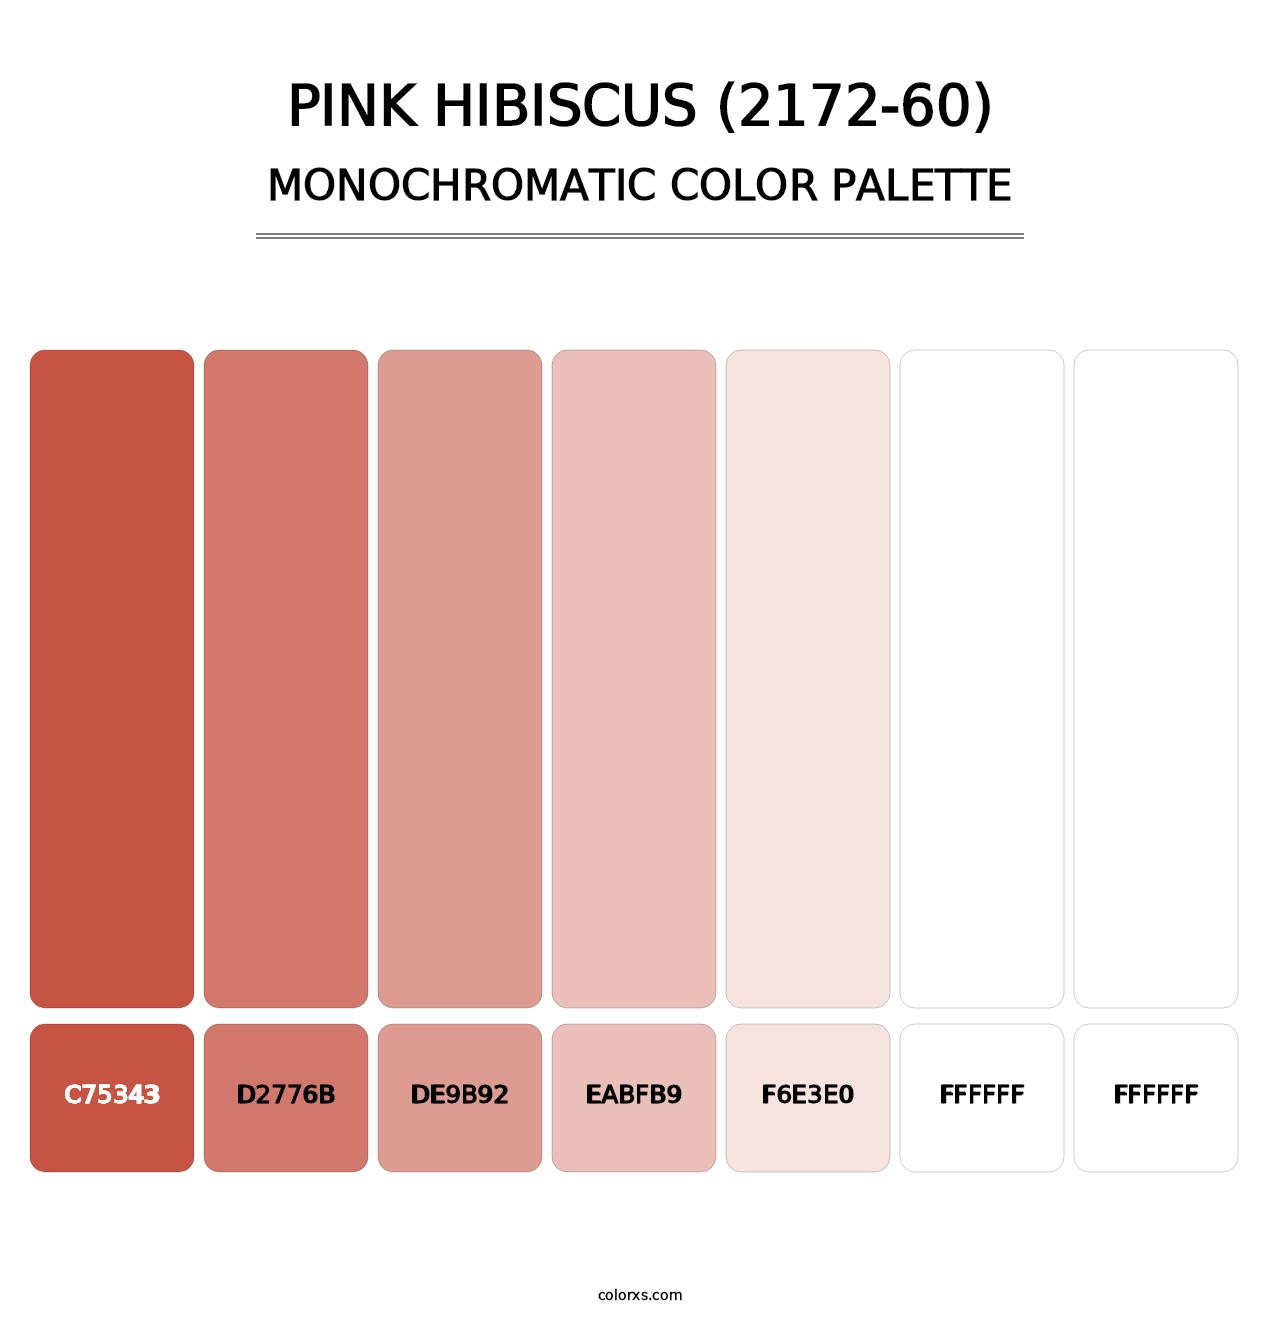 Pink Hibiscus (2172-60) - Monochromatic Color Palette